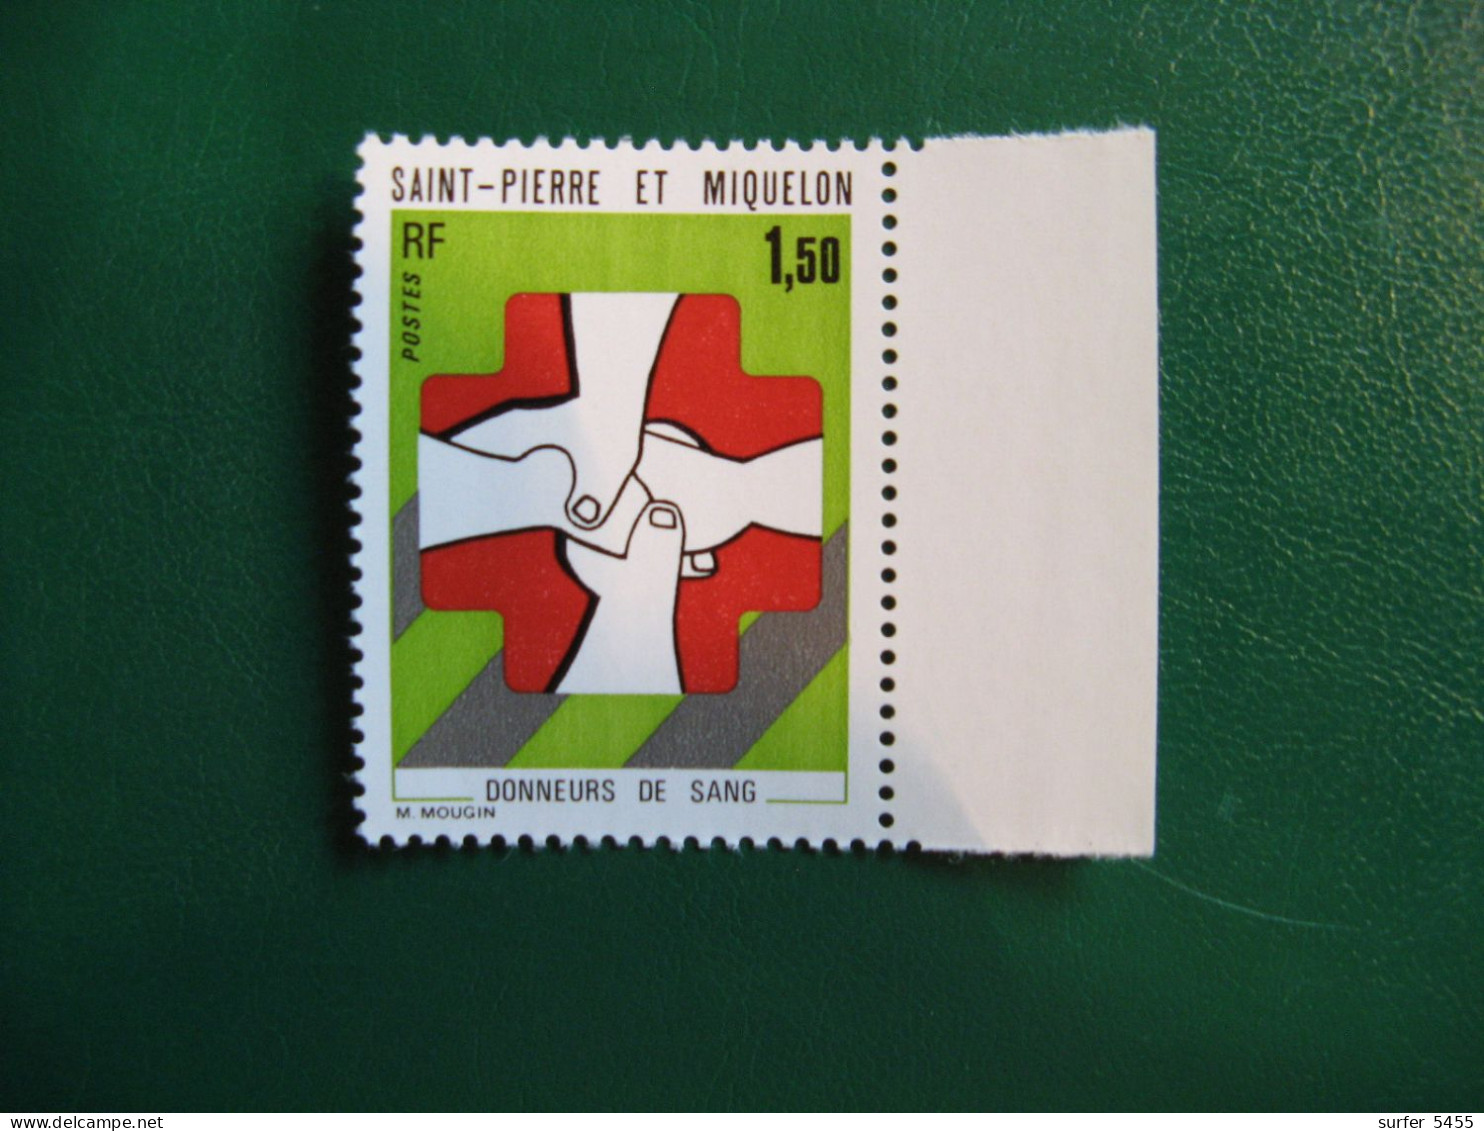 SAINT PIERRE ET MIQUELON YVERT POSTE ORDINAIRE N° 436 NEUF** LUXE - MNH -  COTE 15,00 EUROS - Unused Stamps